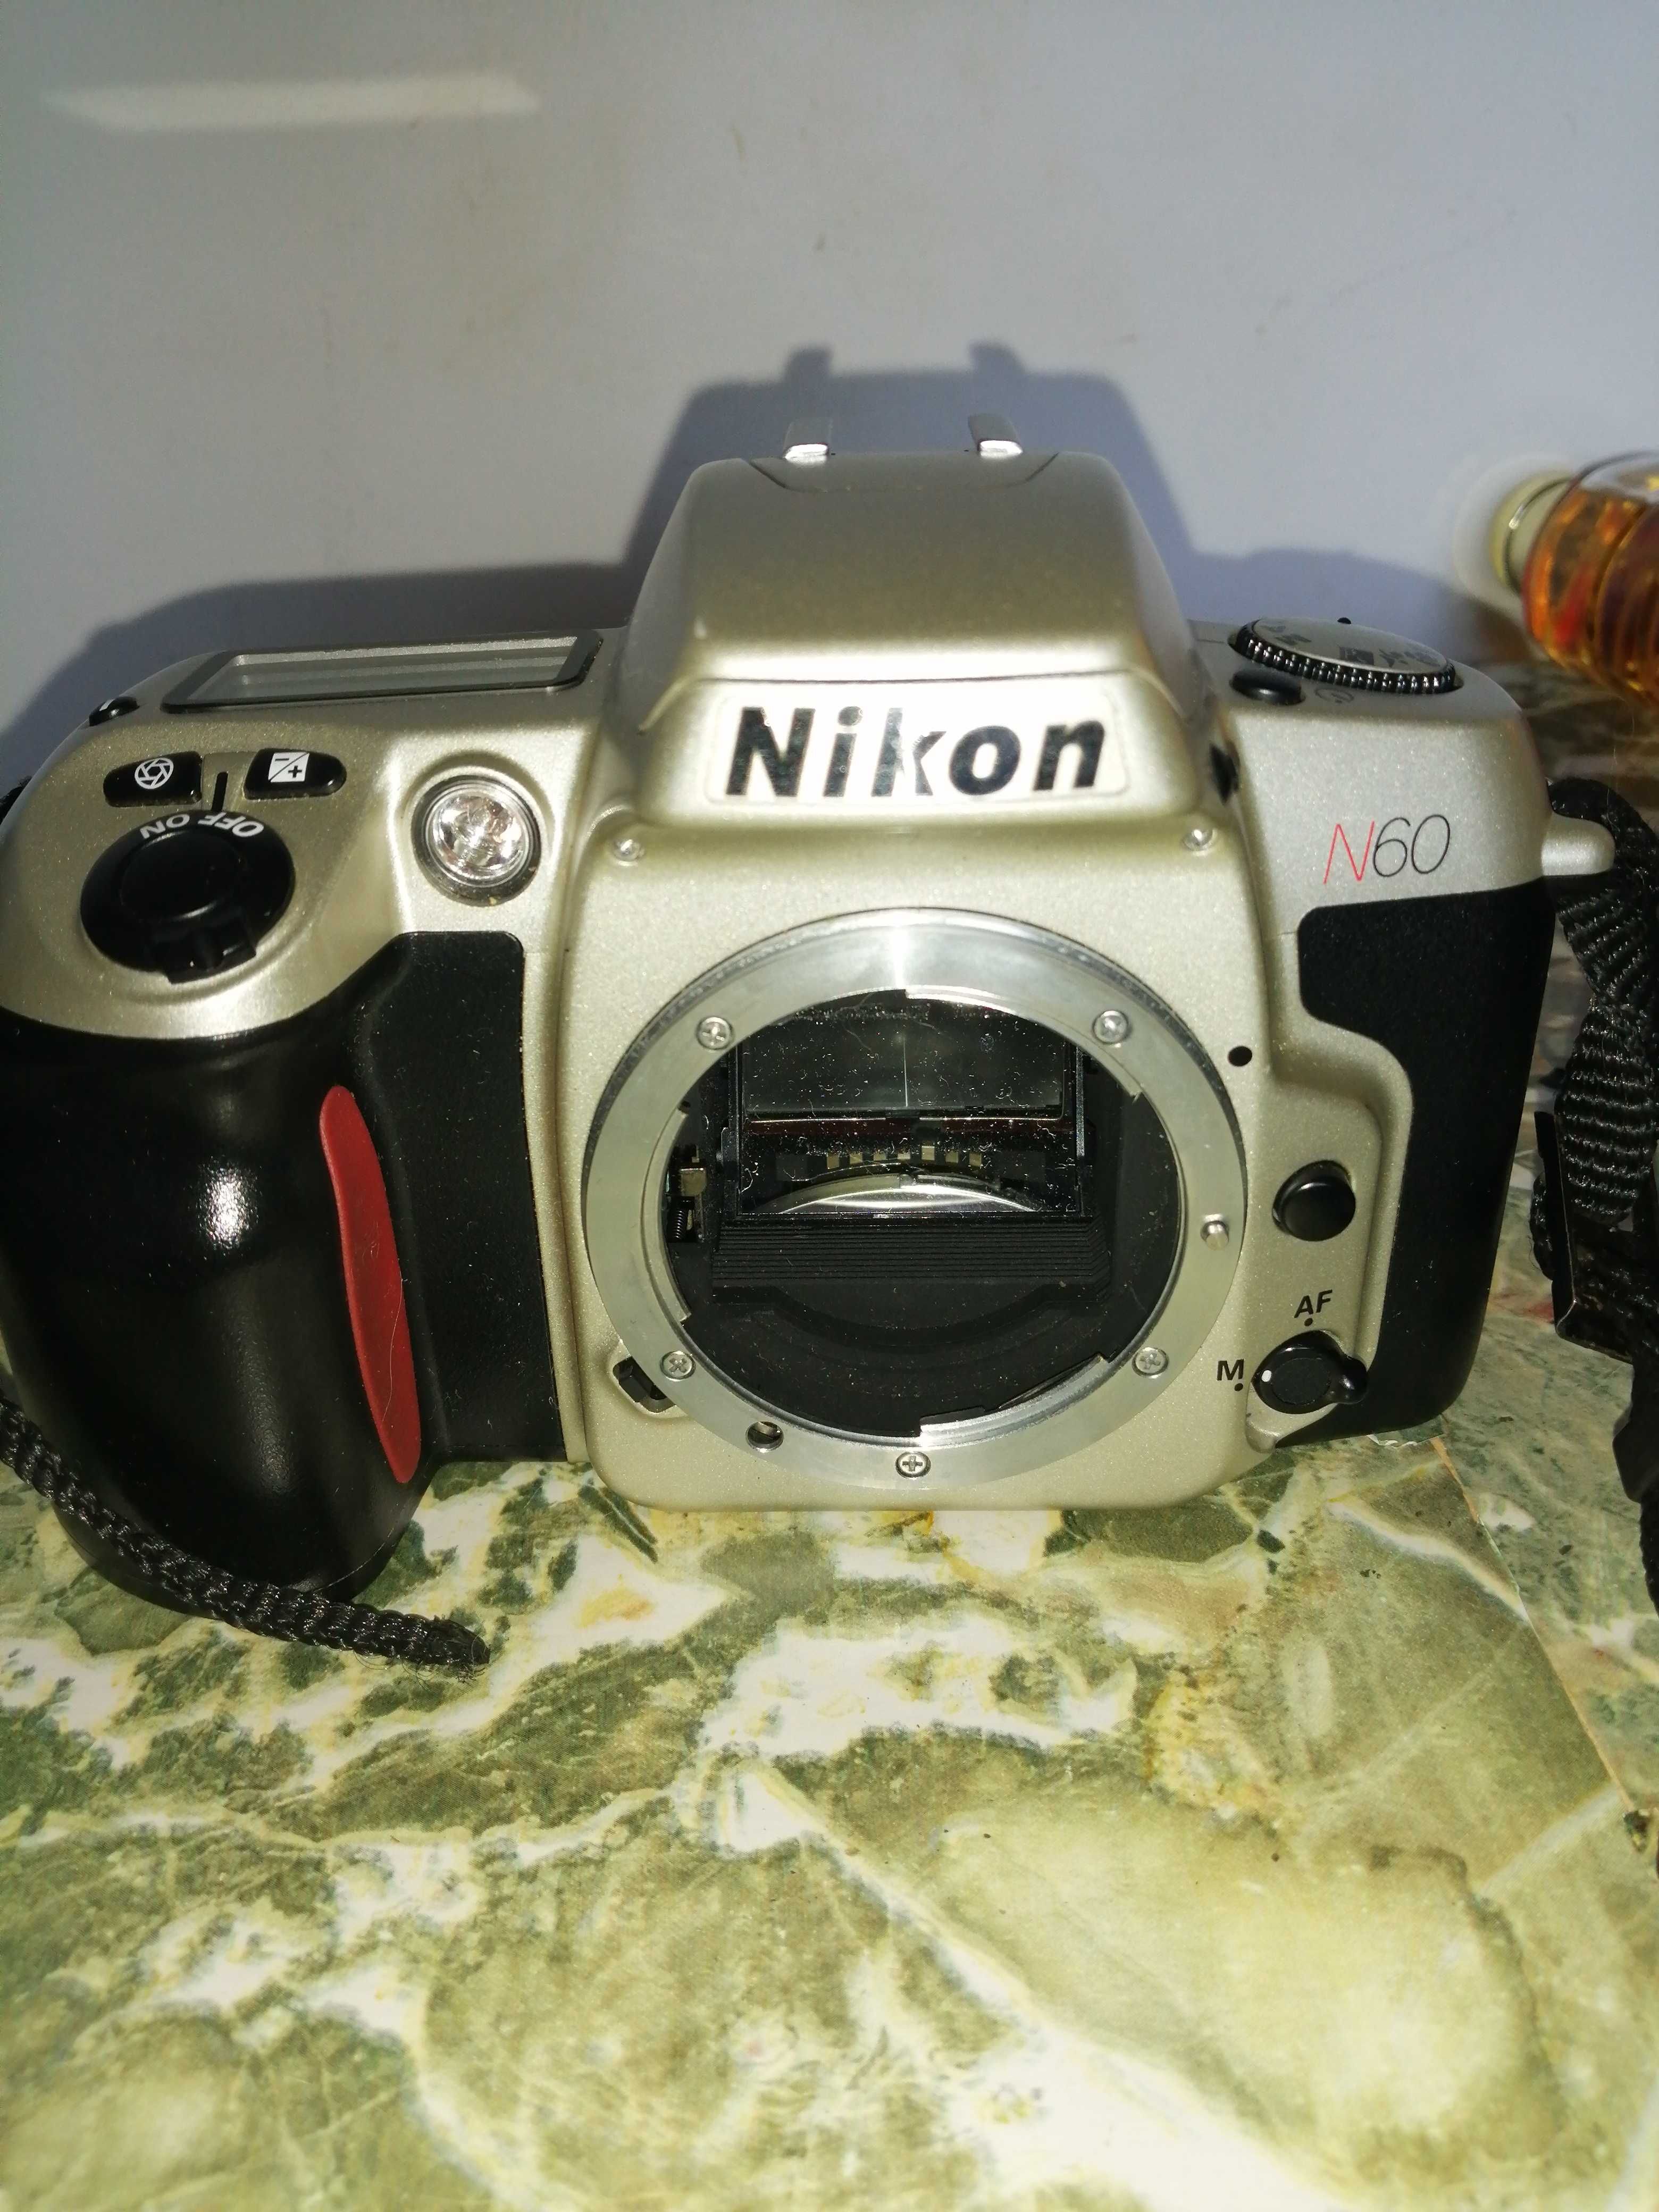 Camera nikon N60